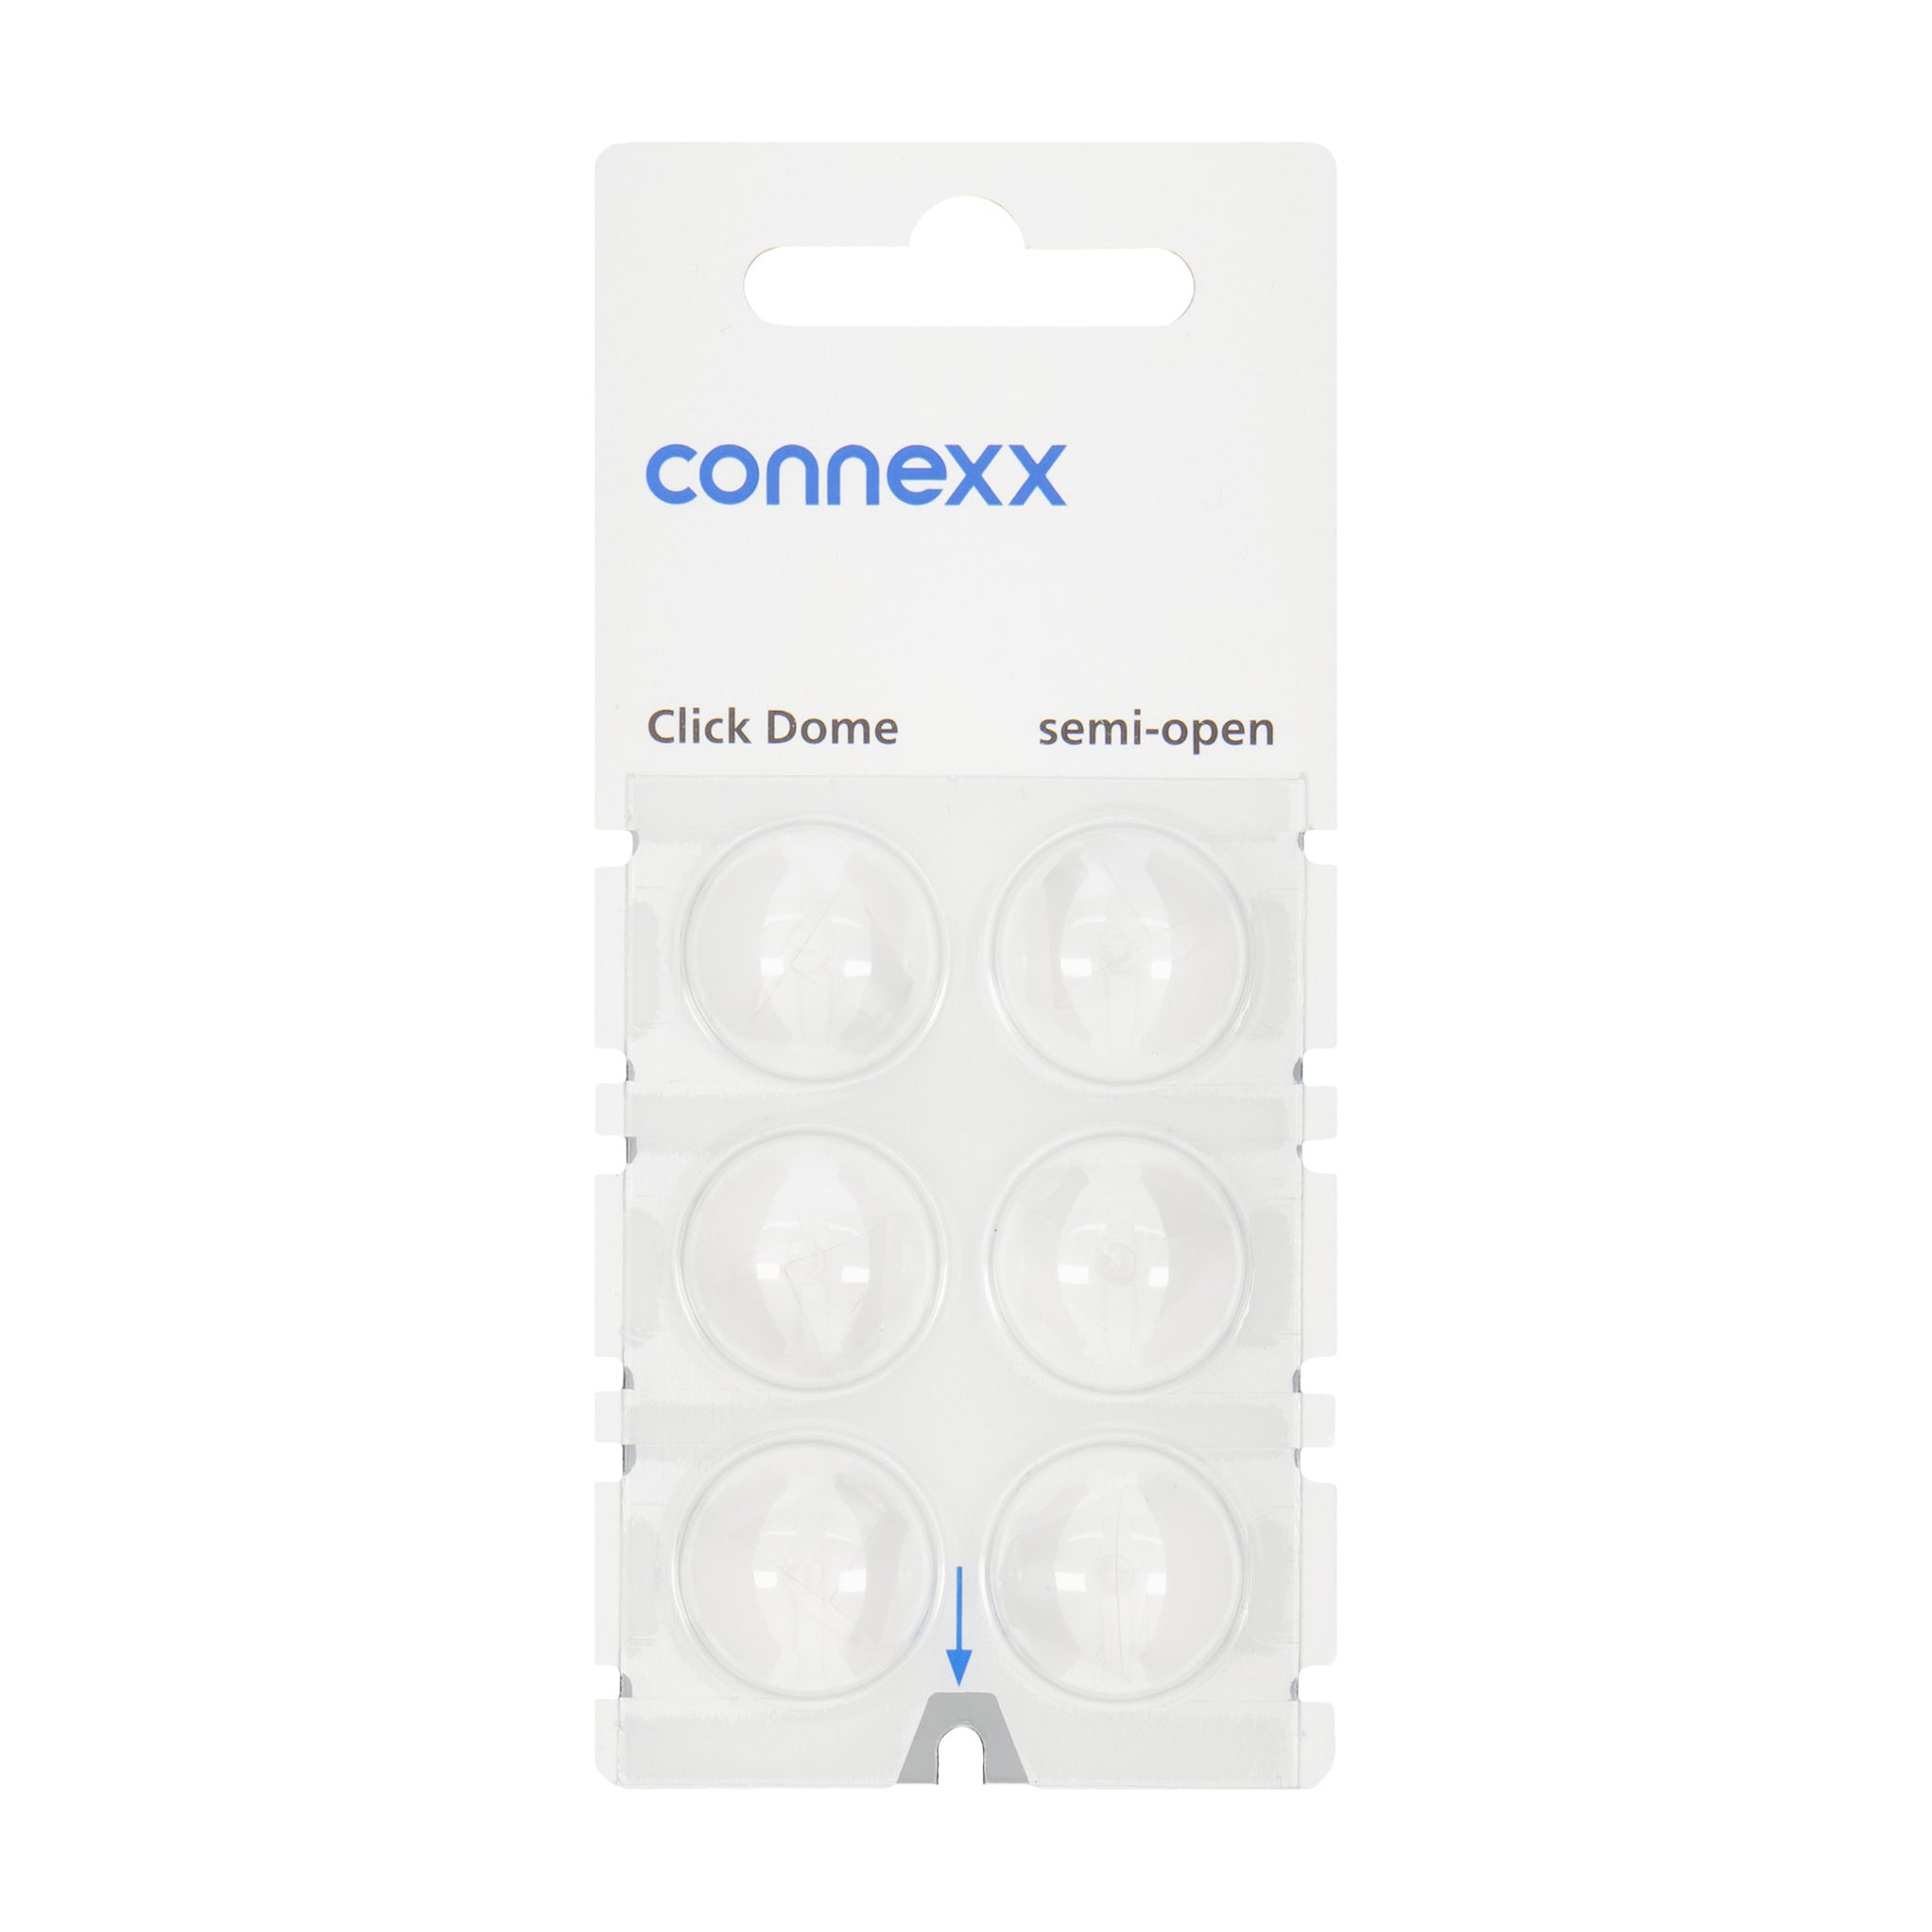 connexx accessories